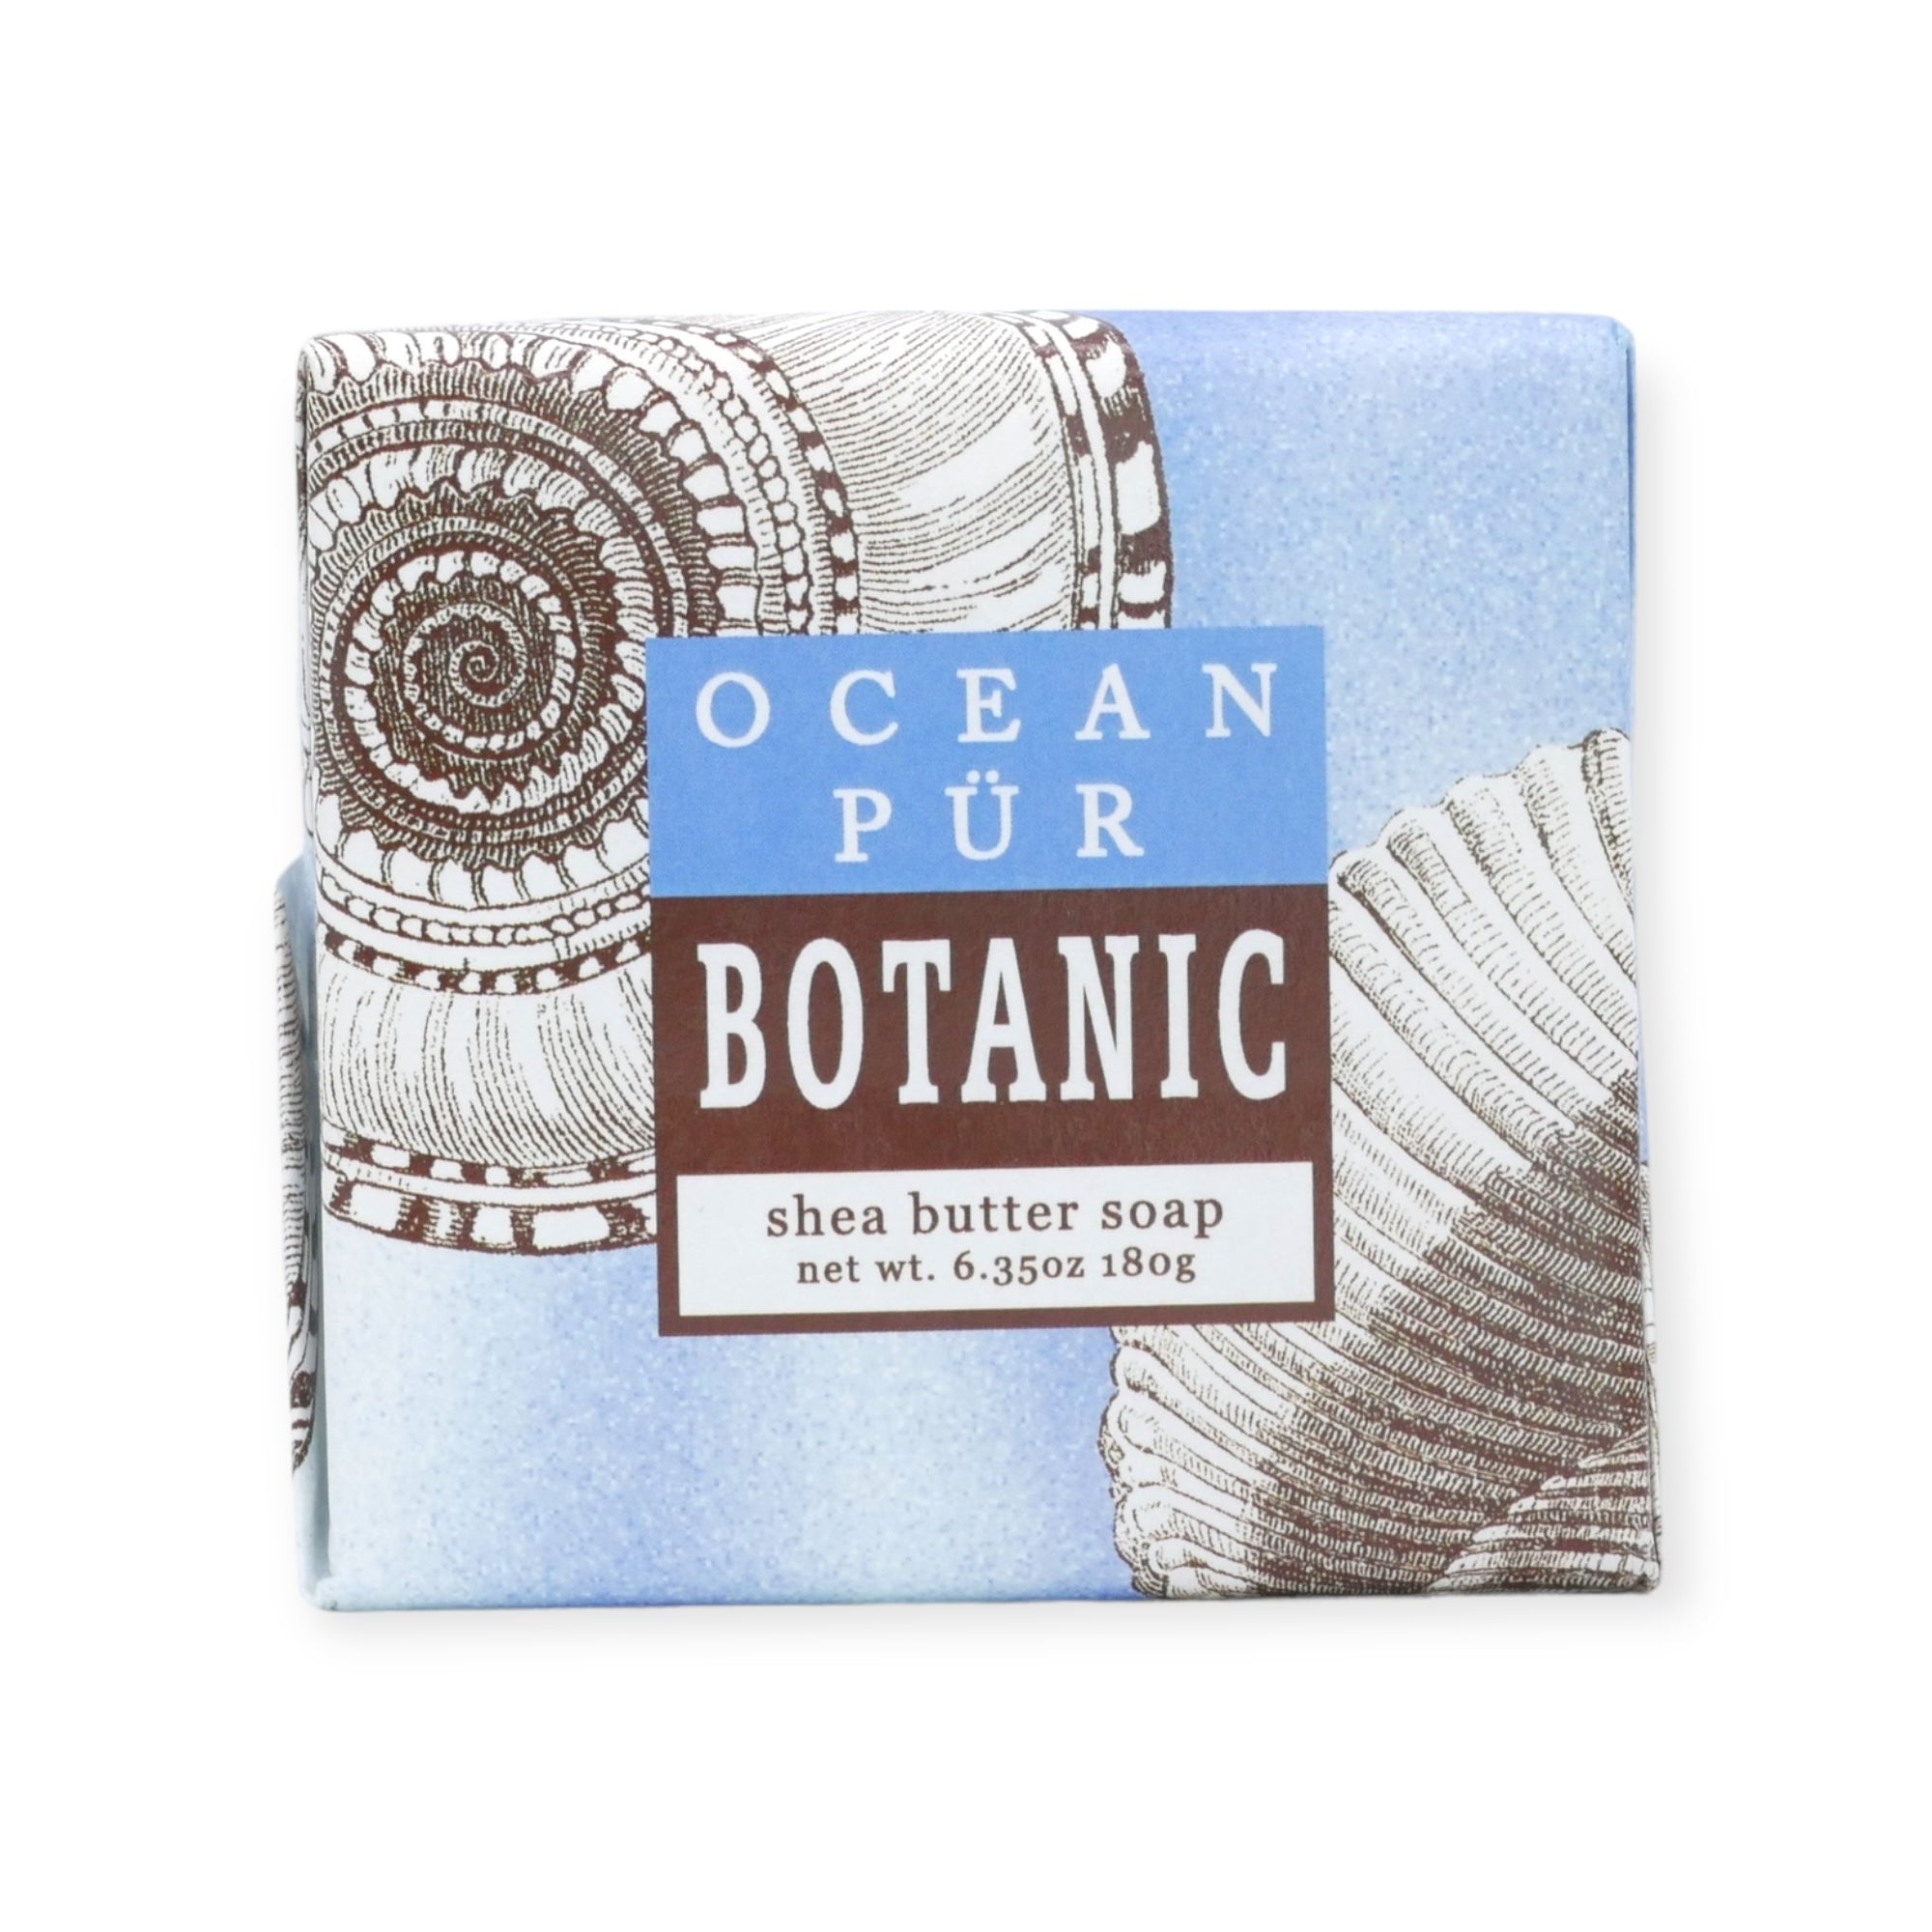 Ocean Pür Botanic Shea Butter Soap by Greenwich Bay Trading Co.